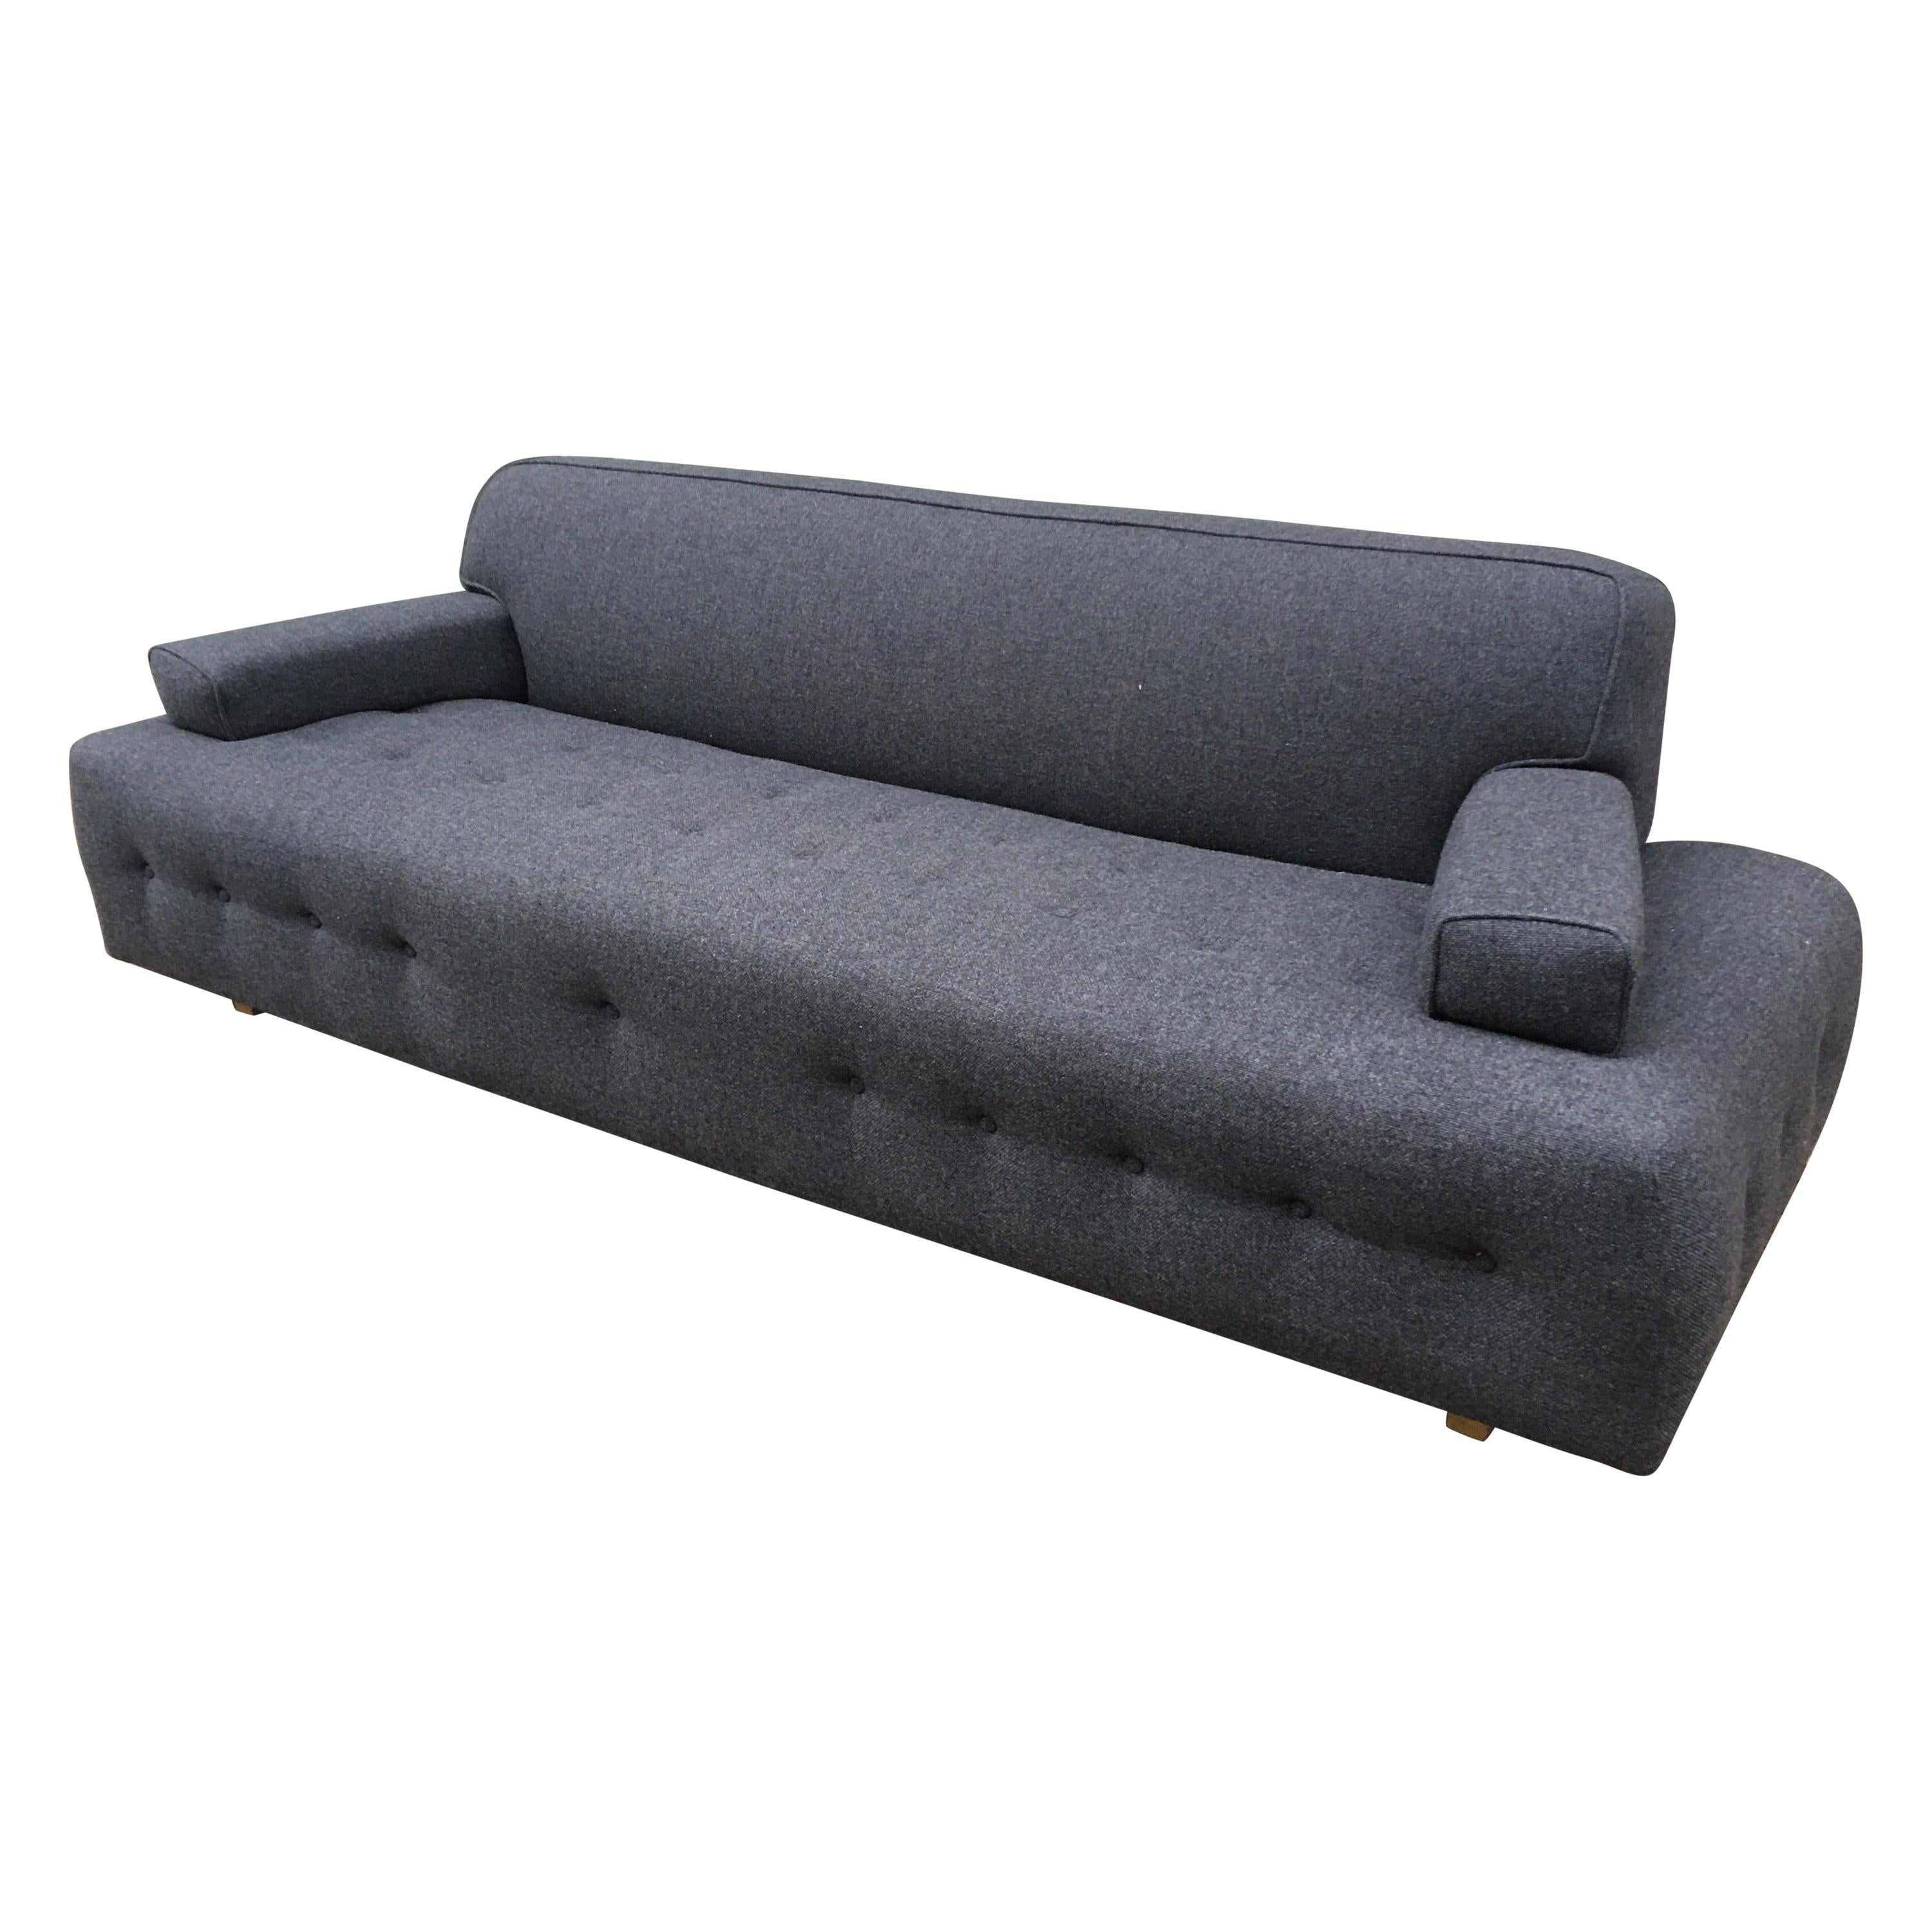 James Mont Style Sofa